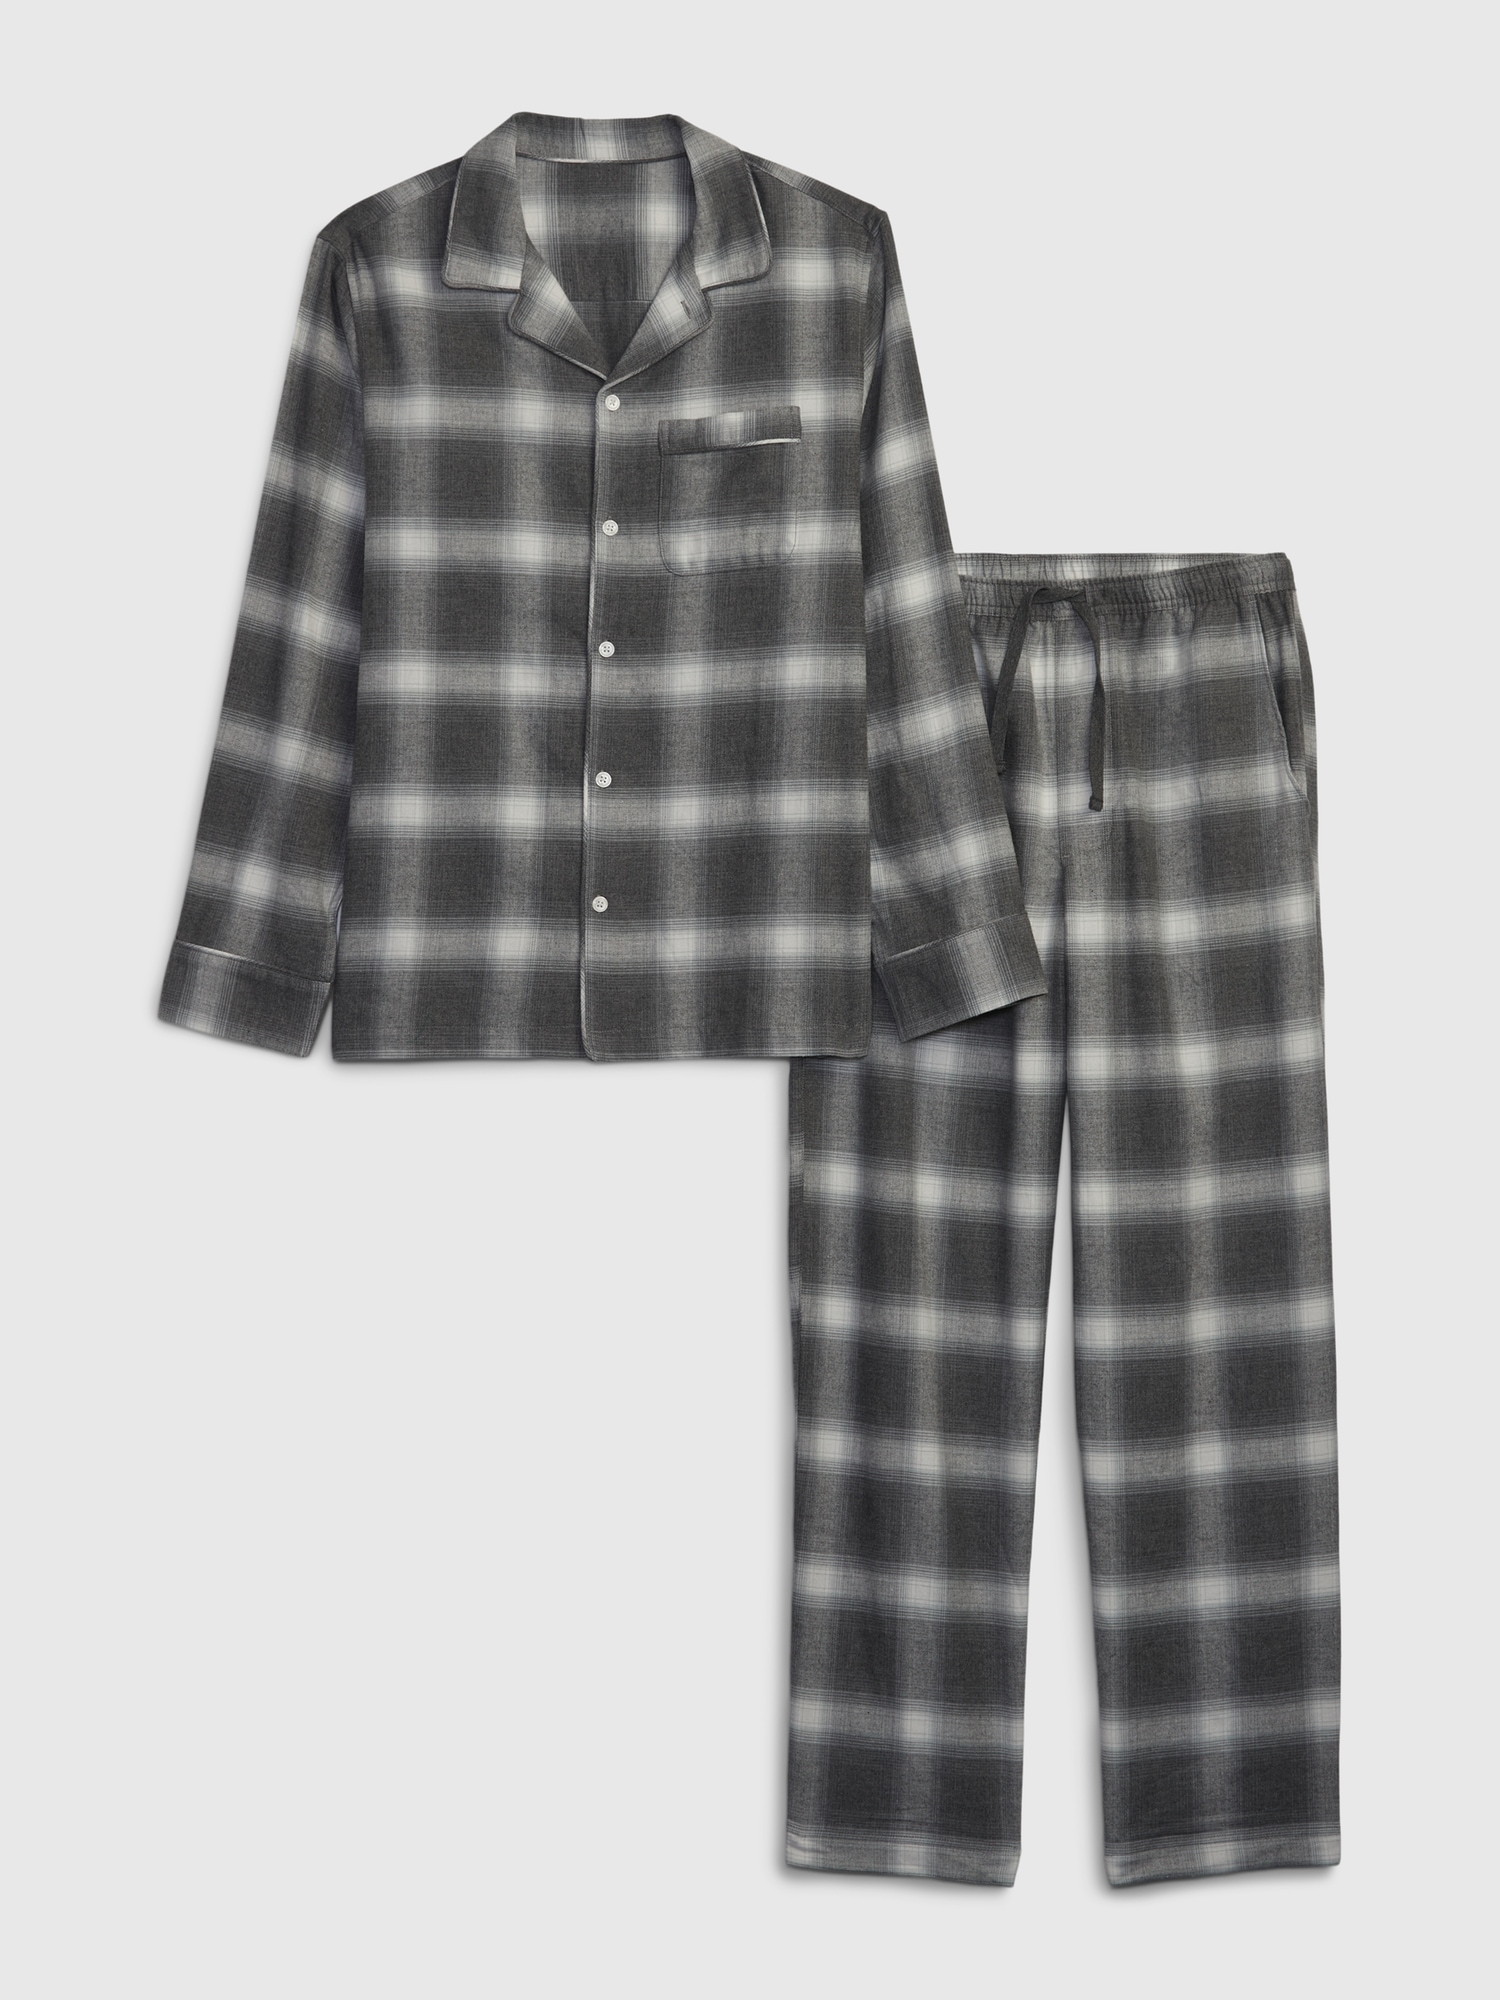 LANBAOSI Men Pajamas Set Comfy Plaid Flannel Pants And Microfleece Shirt  Size M